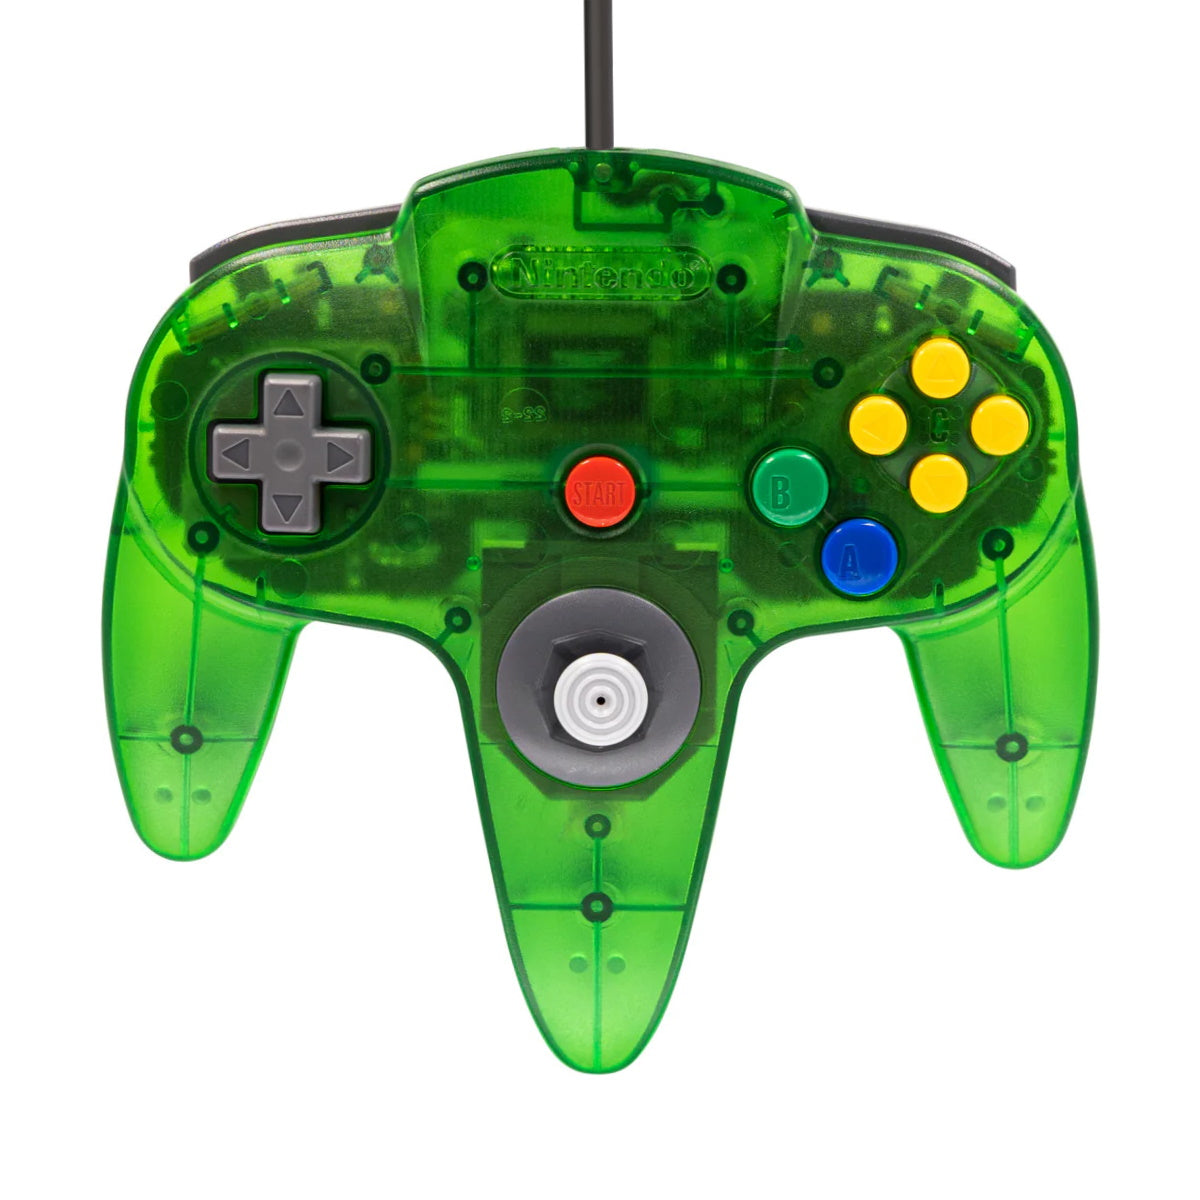 Nintendo 64 (N64) Official Controller - Jungle Green